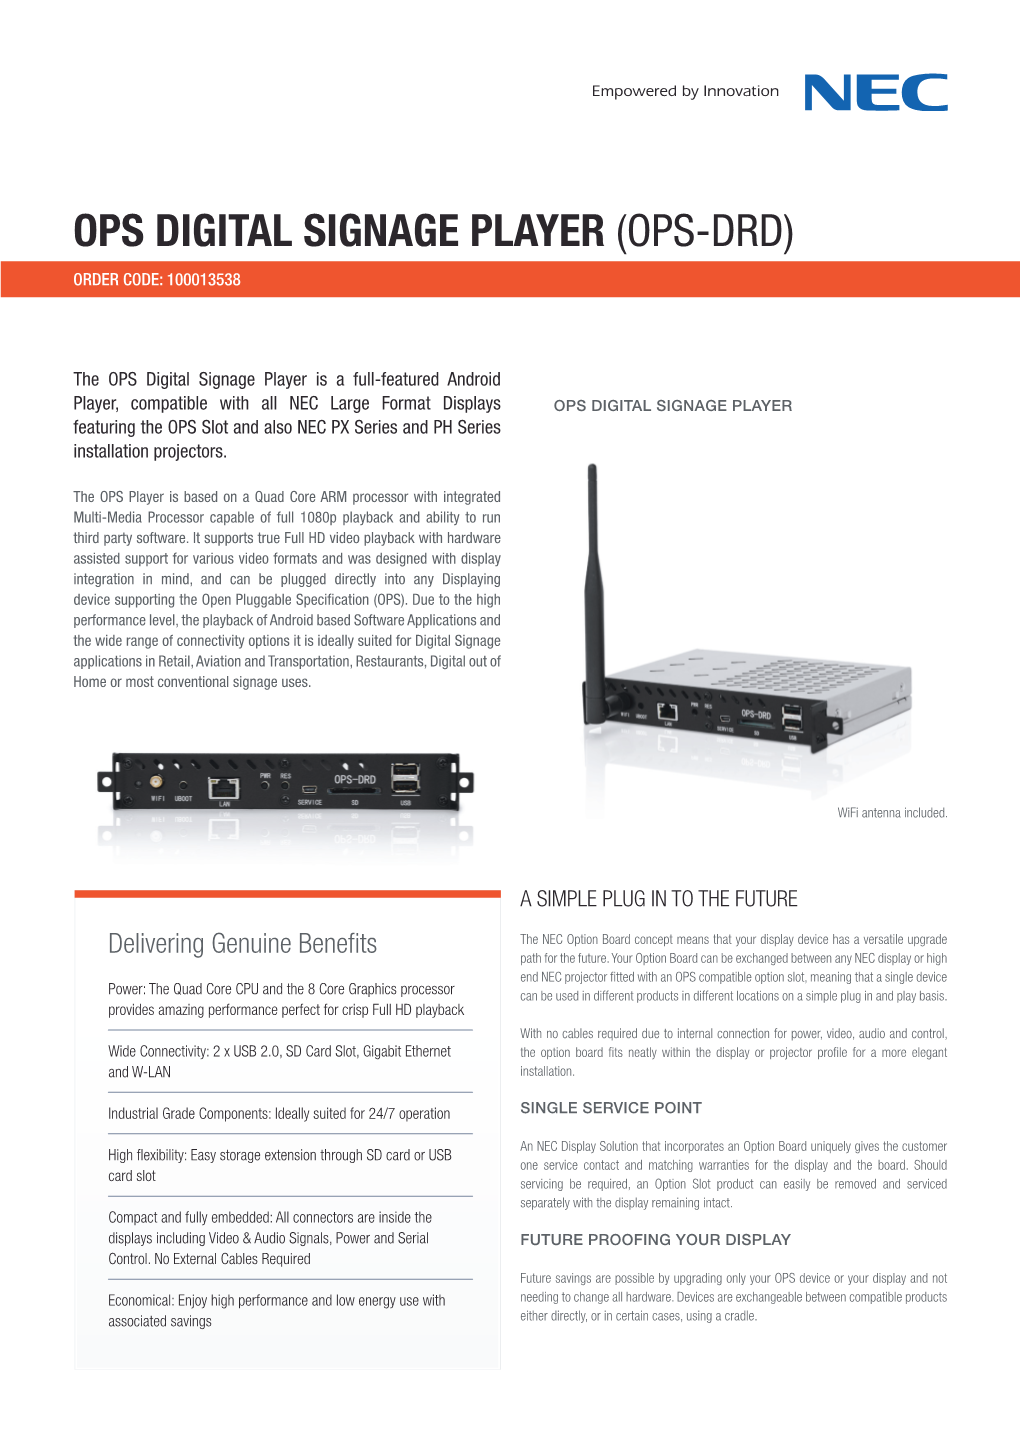 Ops Digital Signage Player (Ops-Drd) Order Code: 100013538